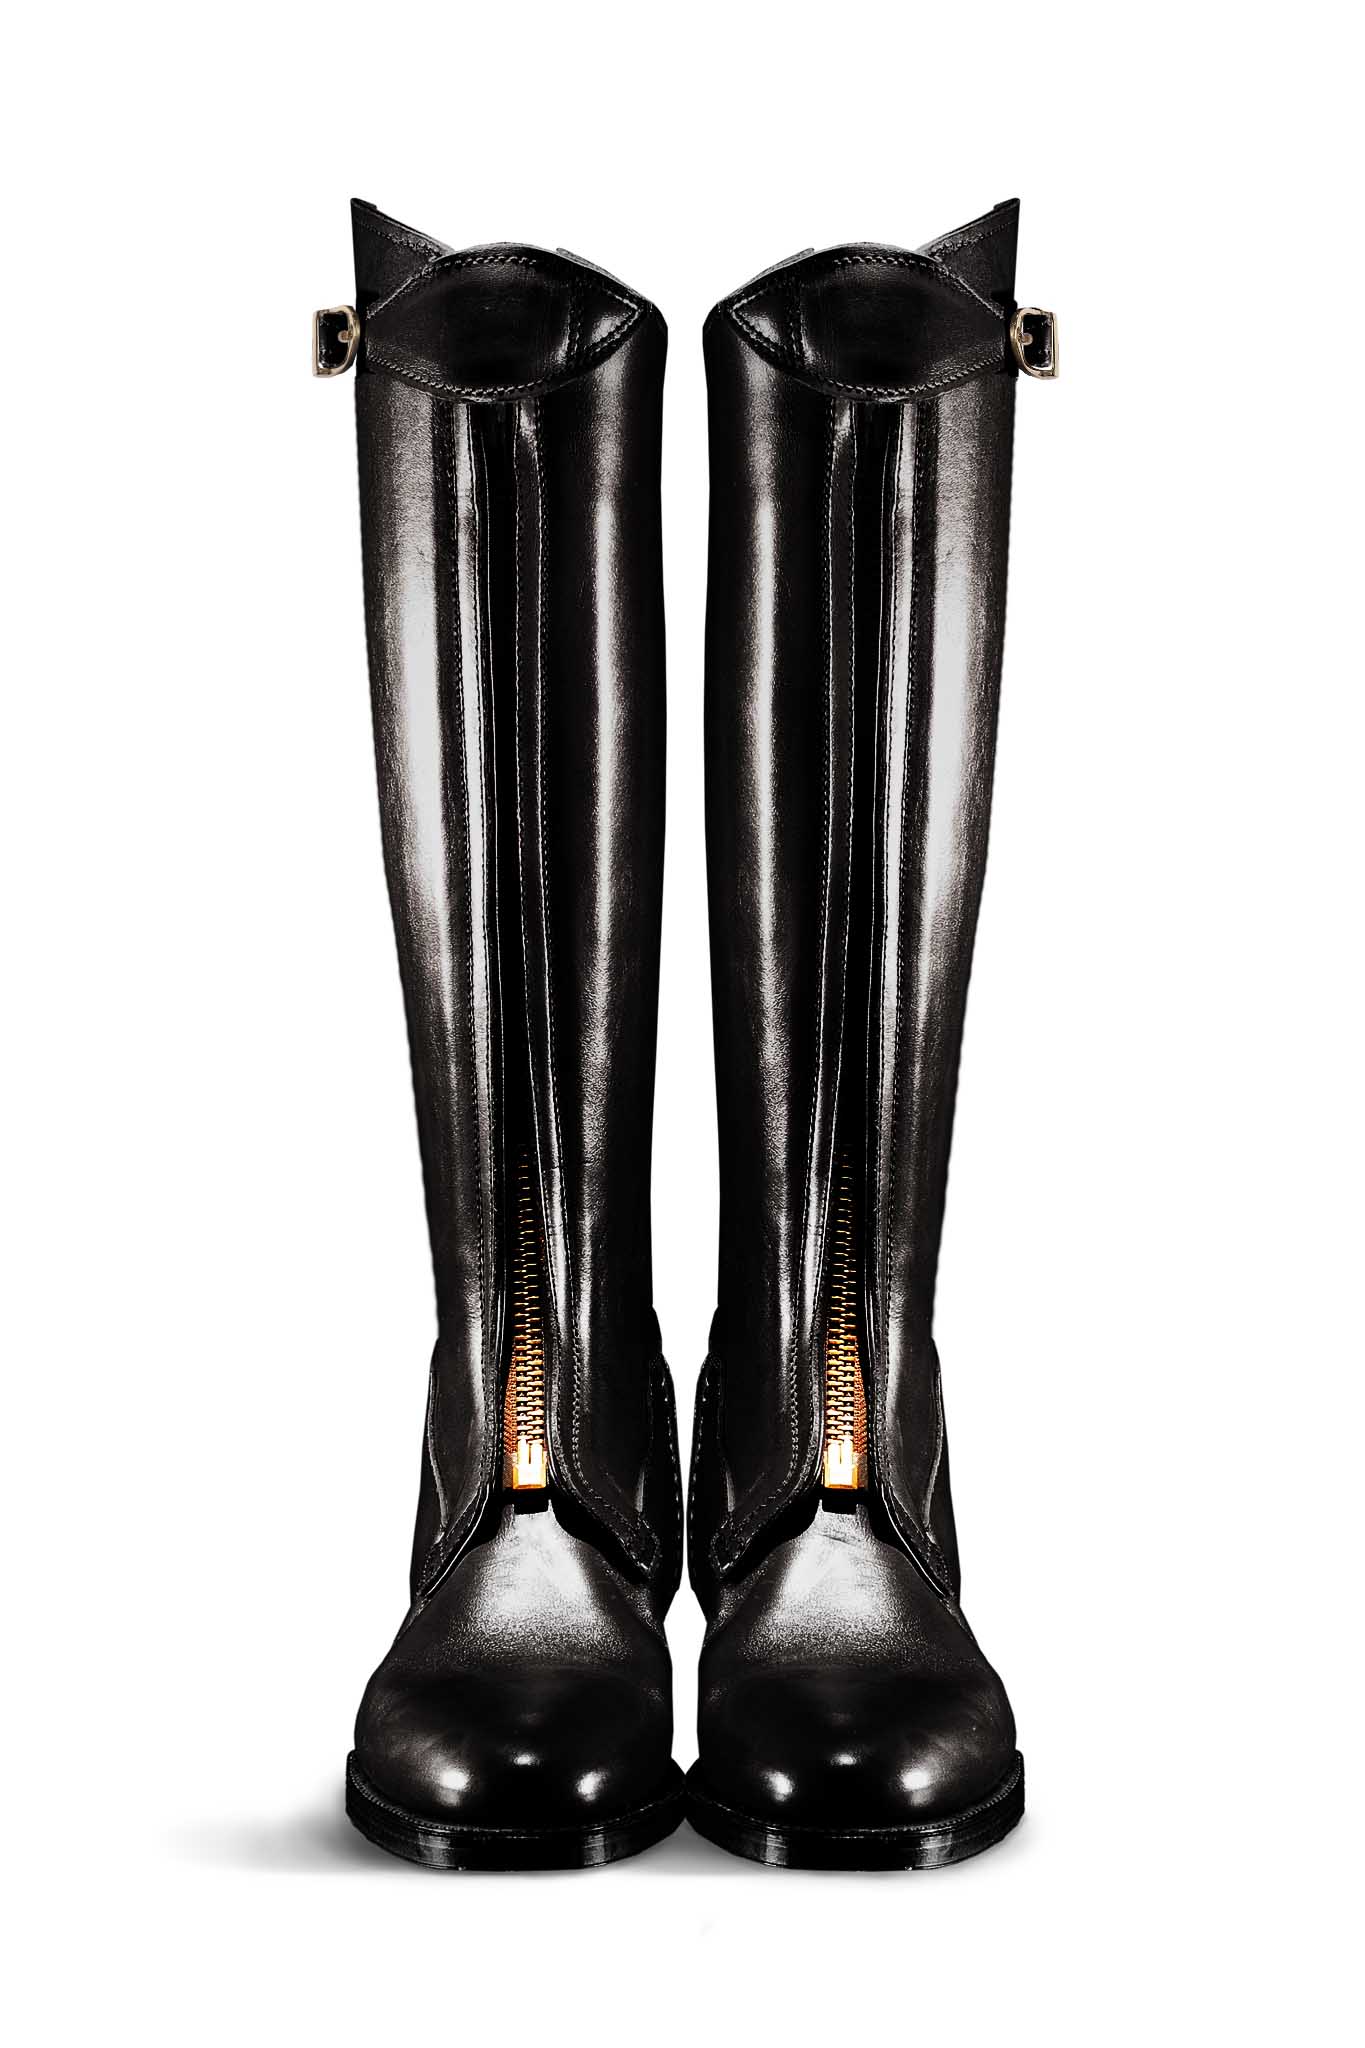 Custom Made 3 Layer Boots (Black)